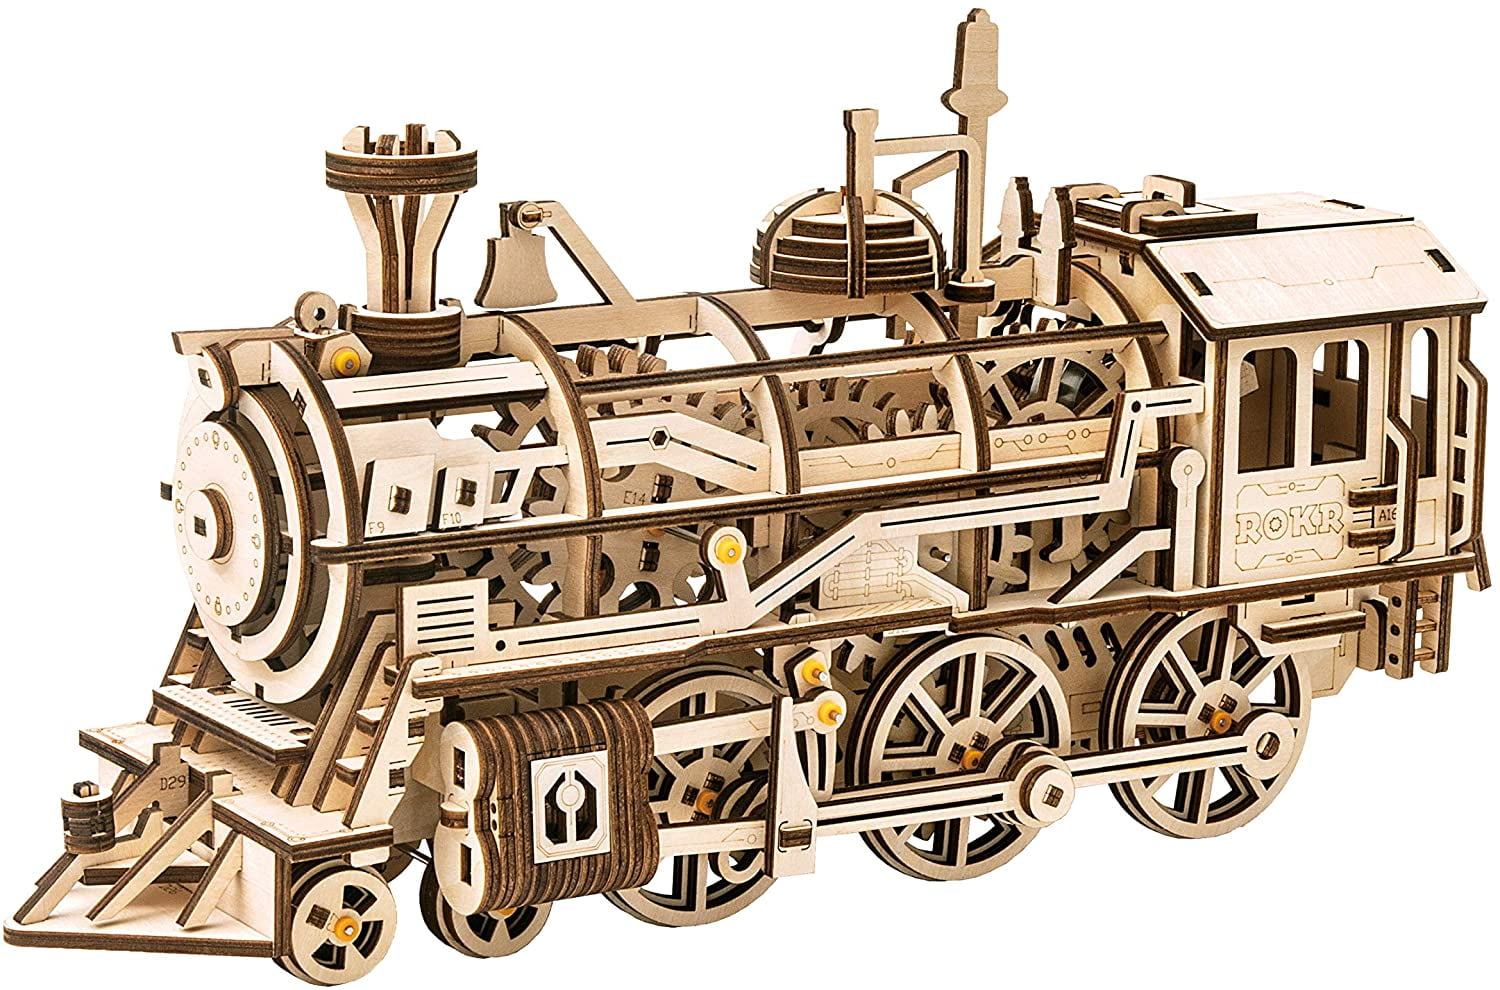 ROKR DIY Wooden Locomotive Model Kits Mechanical Toy Gift for Adult Teen Boy Kid 